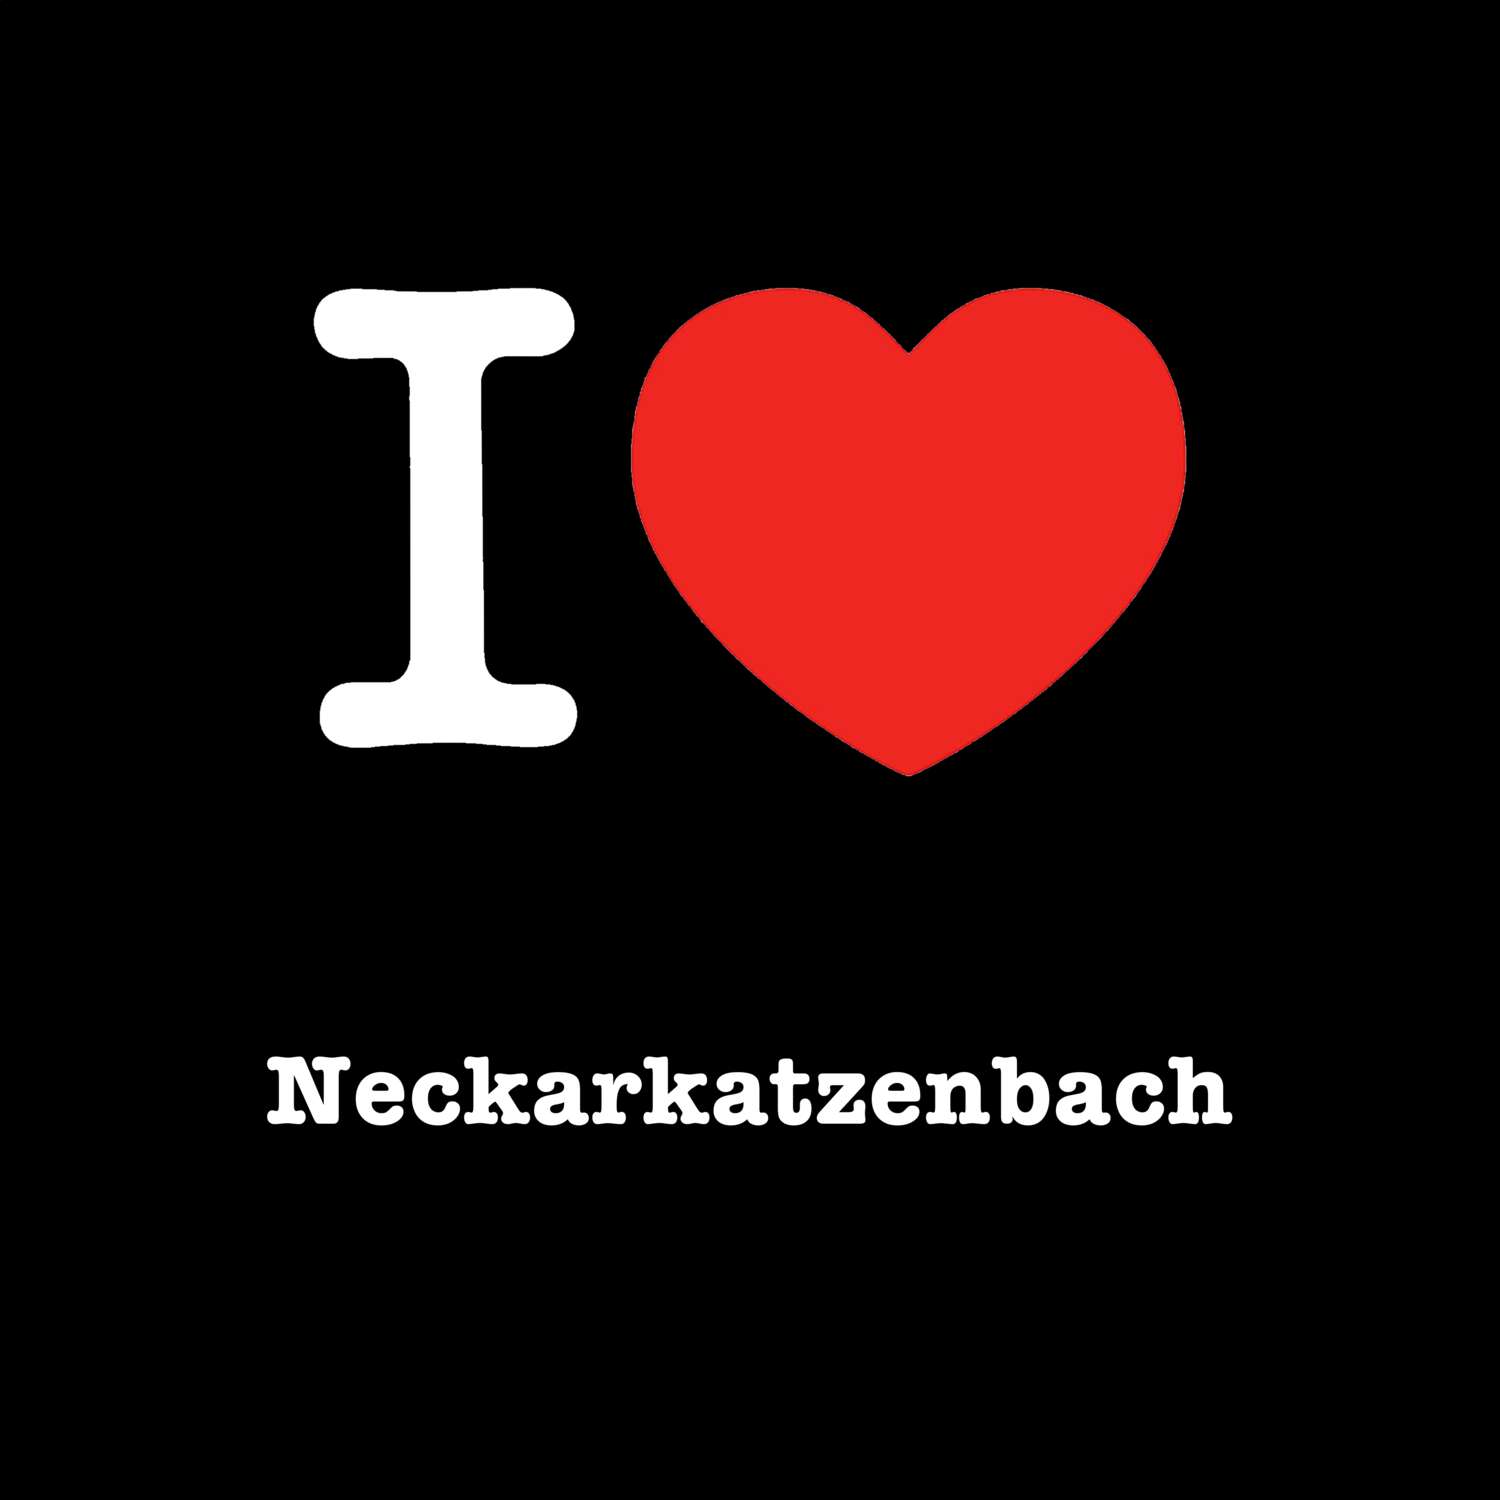 Neckarkatzenbach T-Shirt »I love«